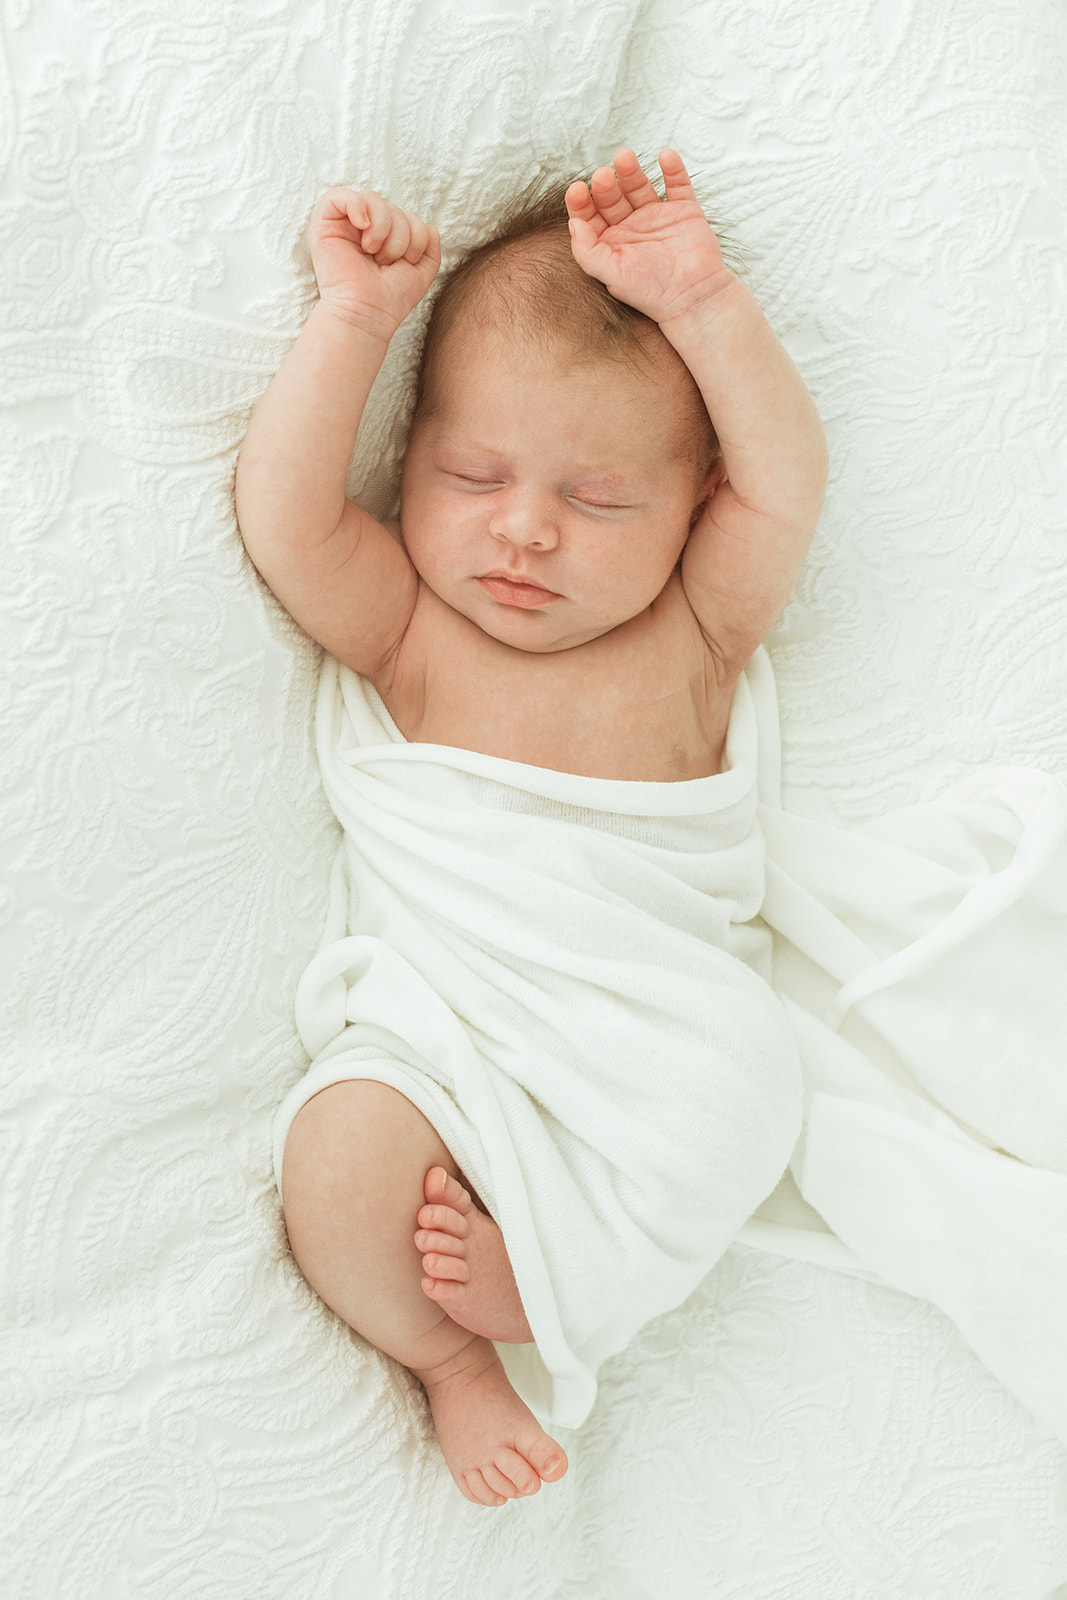 nashville newborn session. sleepy newborn baby girl